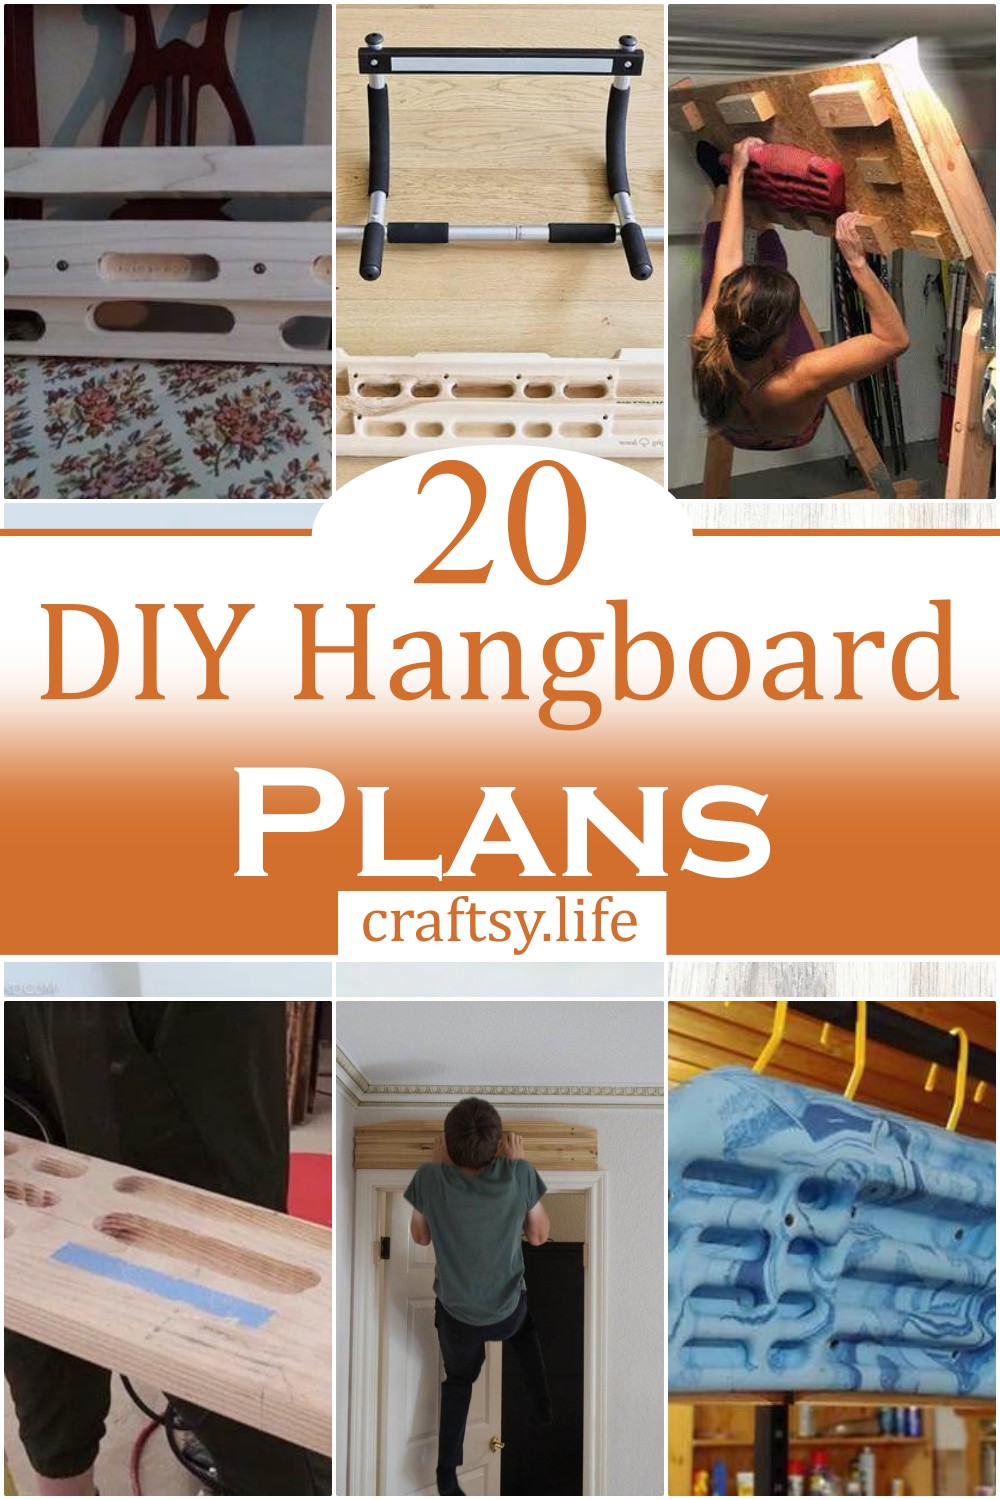 DIY Hangboard Plans